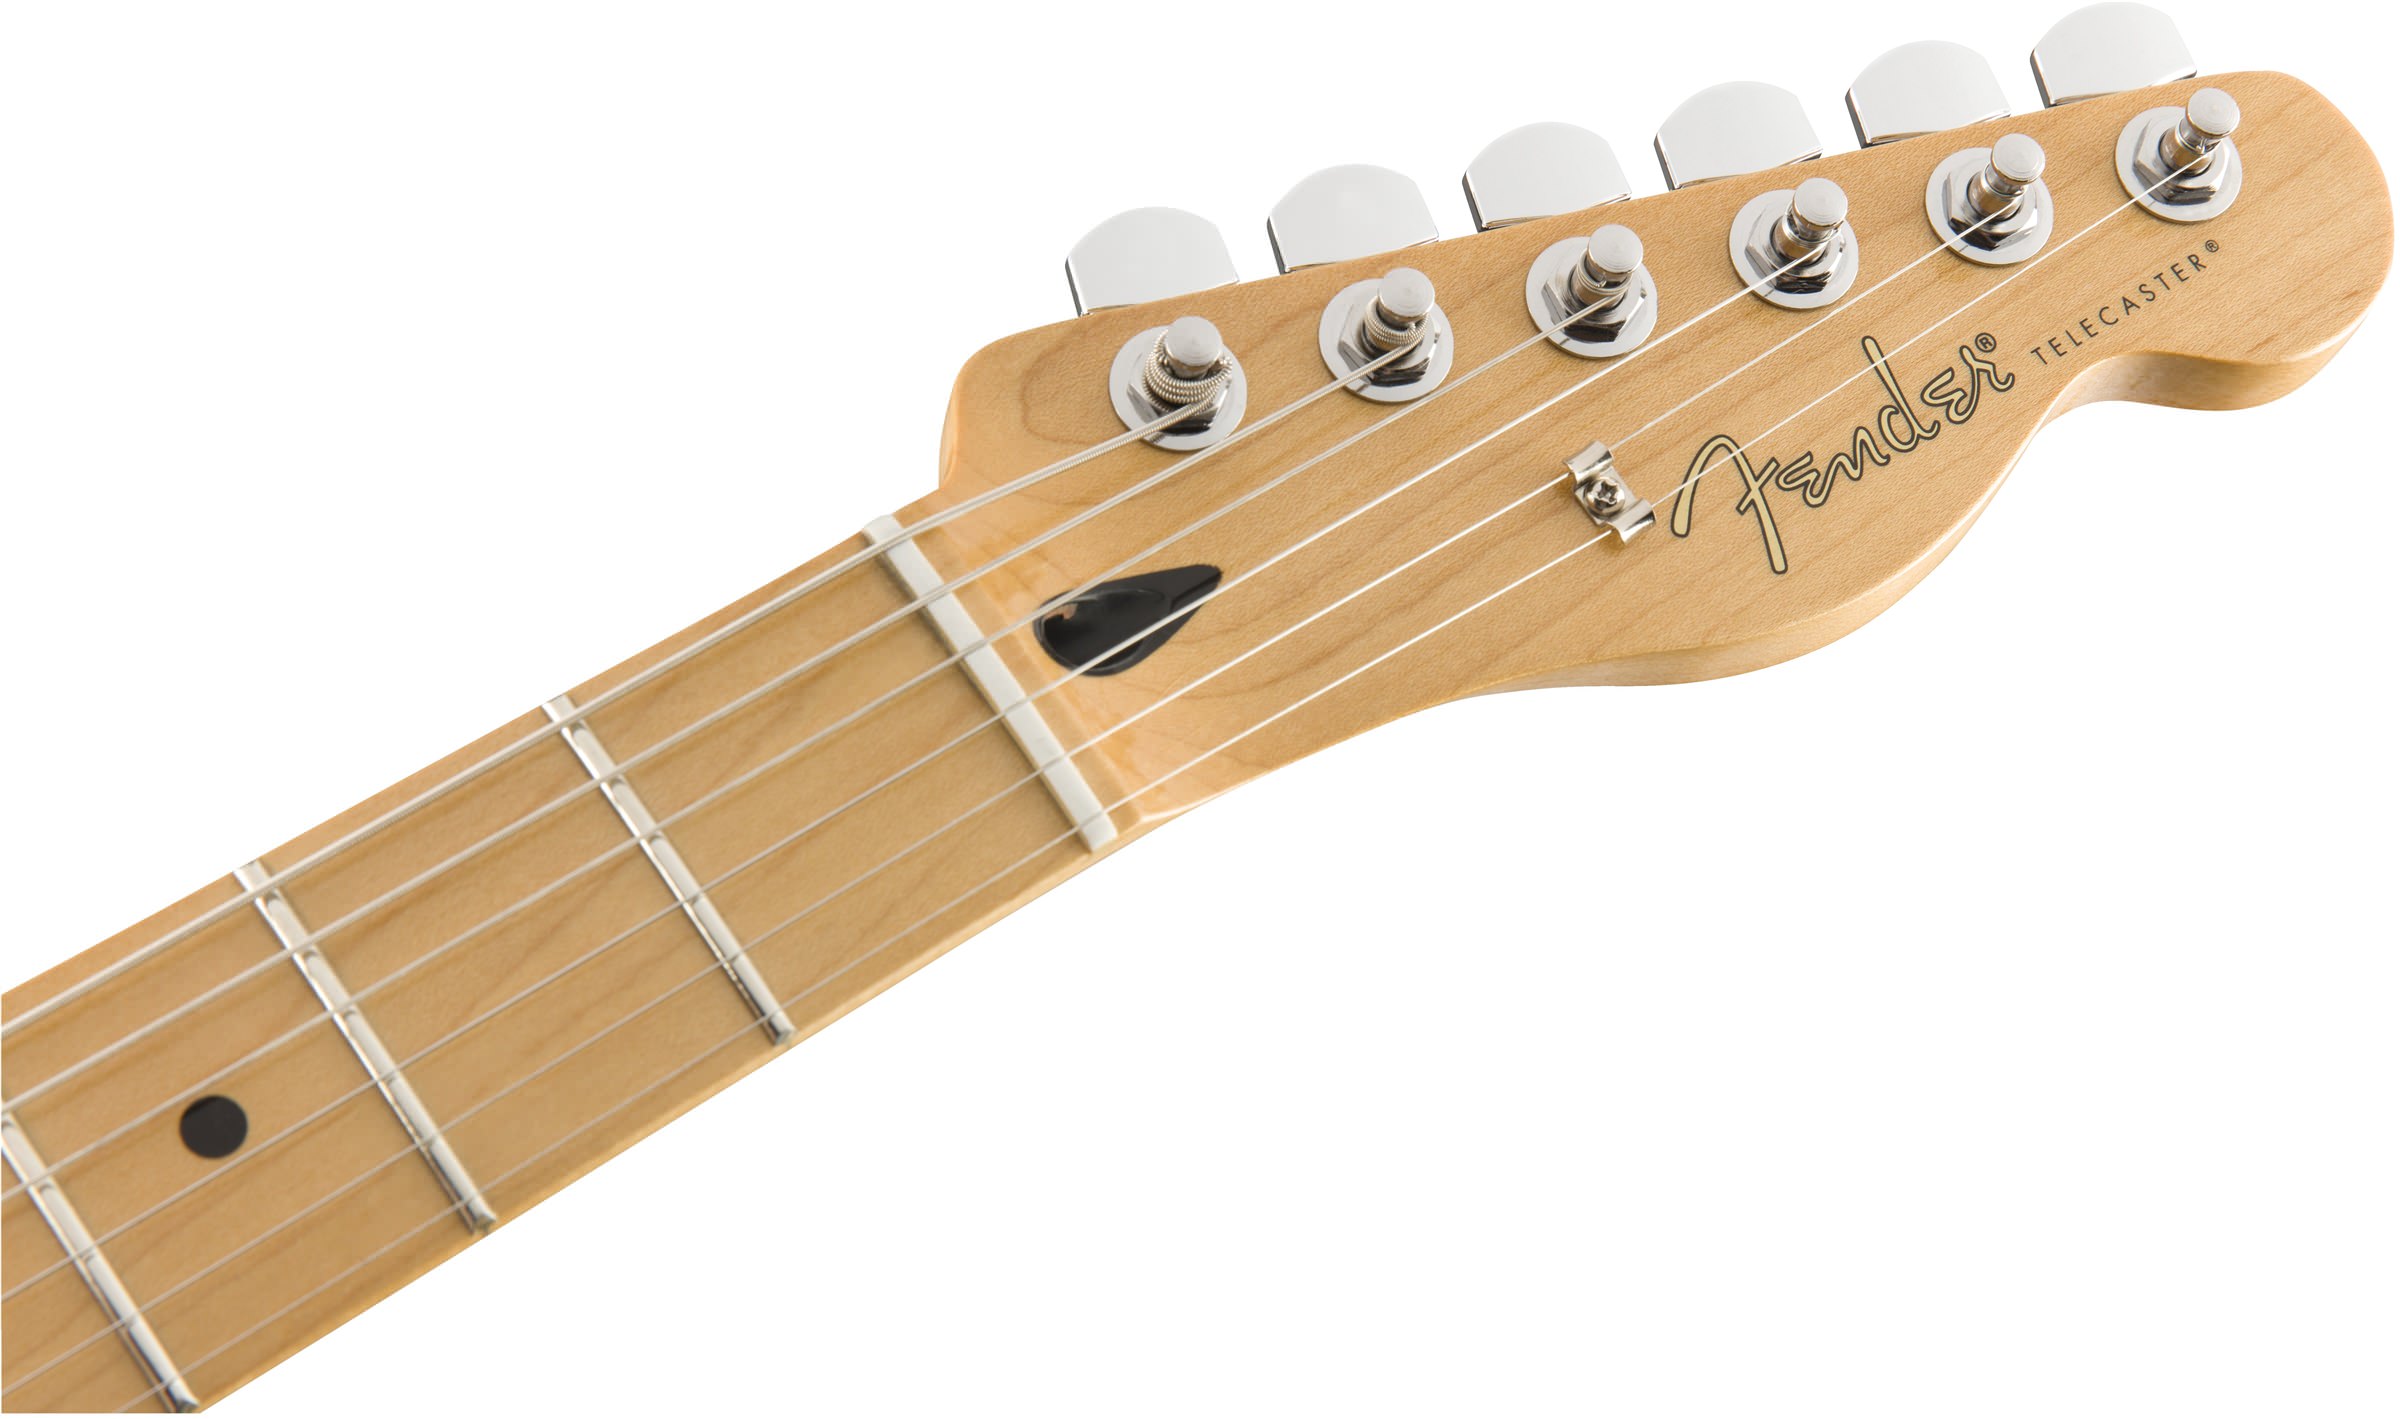 Fender Player Telecaster MN Butterscotch Blonde по цене 124 000 ₽